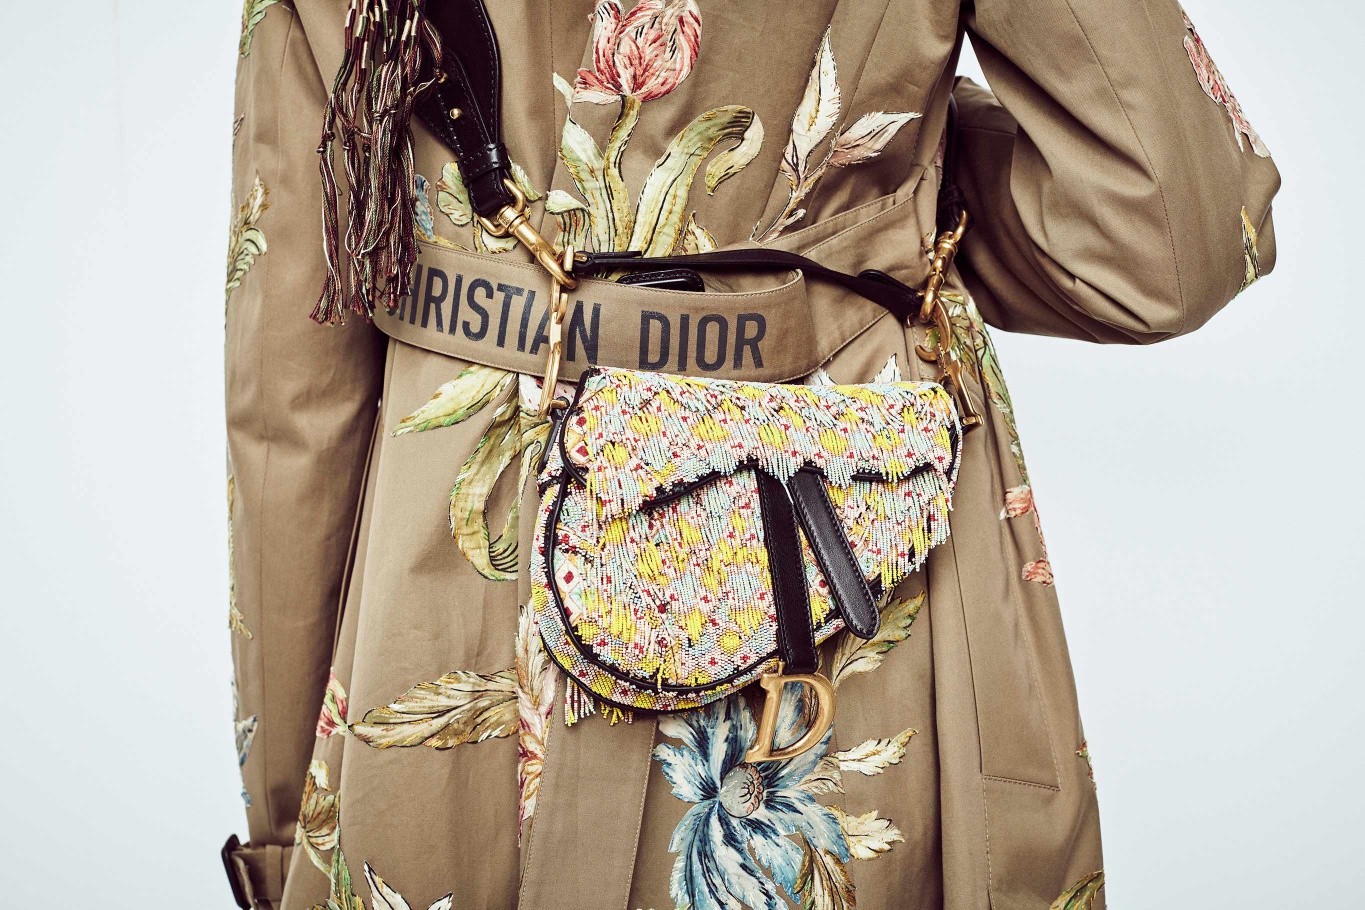 Dior Brought Back Logo Saddle Bag Fall 2018 - Dior Saddle Bags